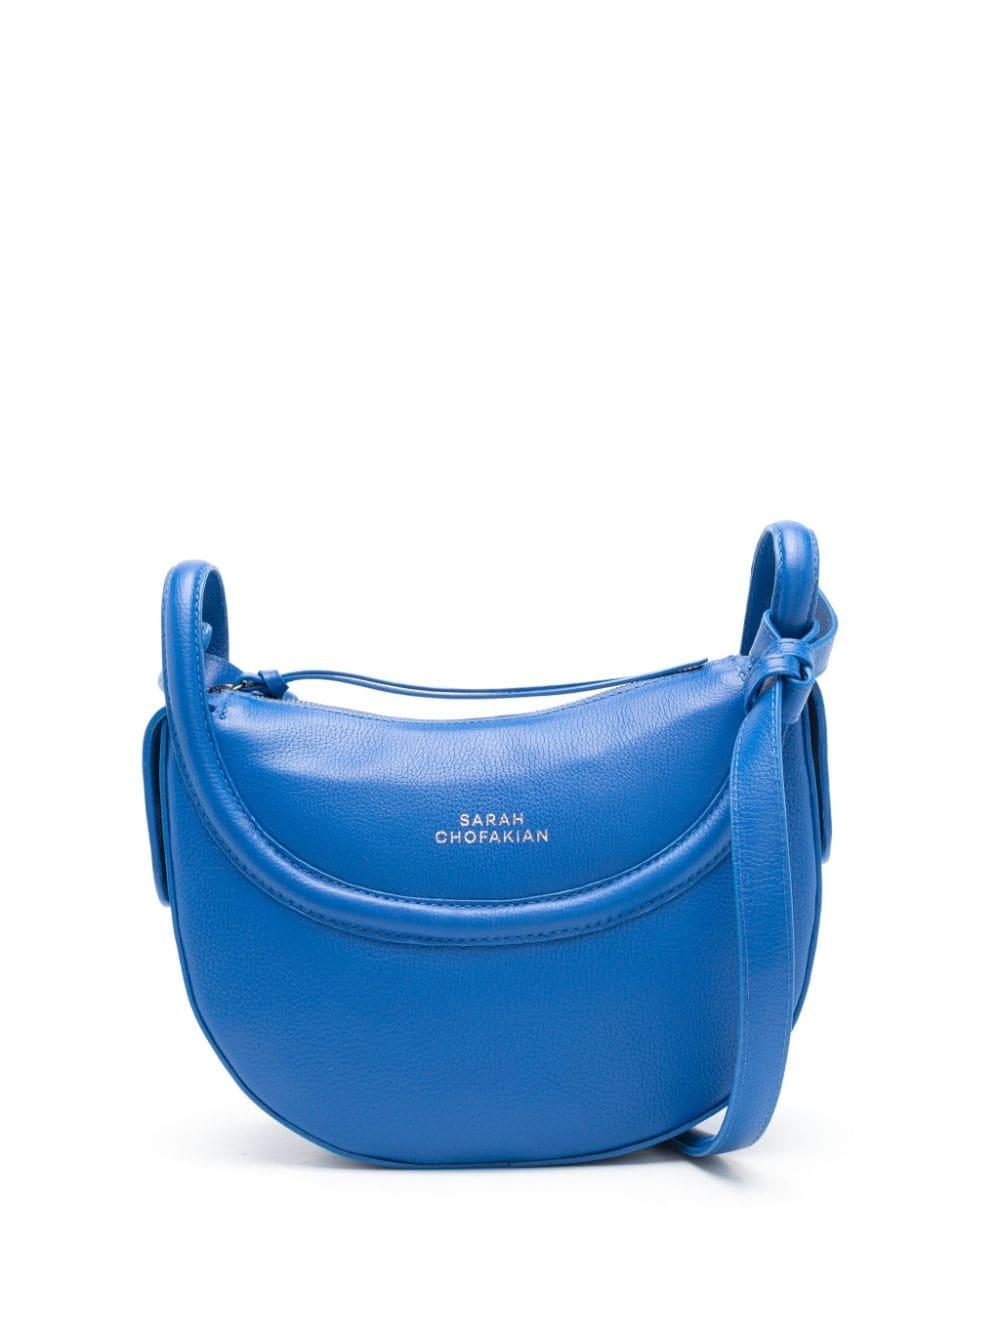 Sarah Chofakian Pollie Leather Crossbody Bag in Blue | Lyst